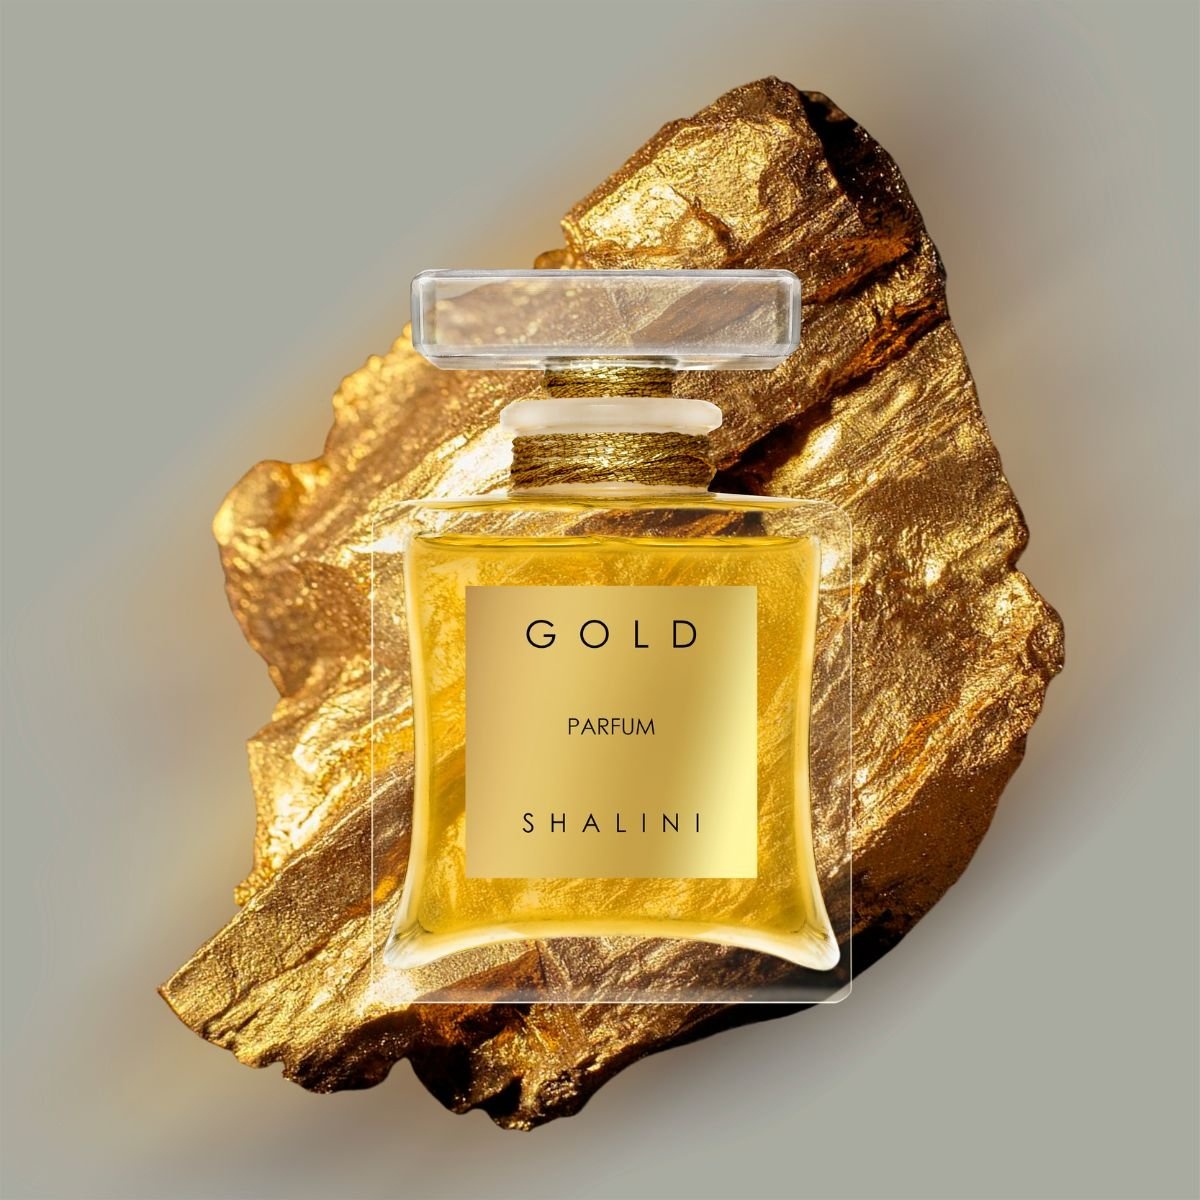 Shalini - Gold parfum glass stopper